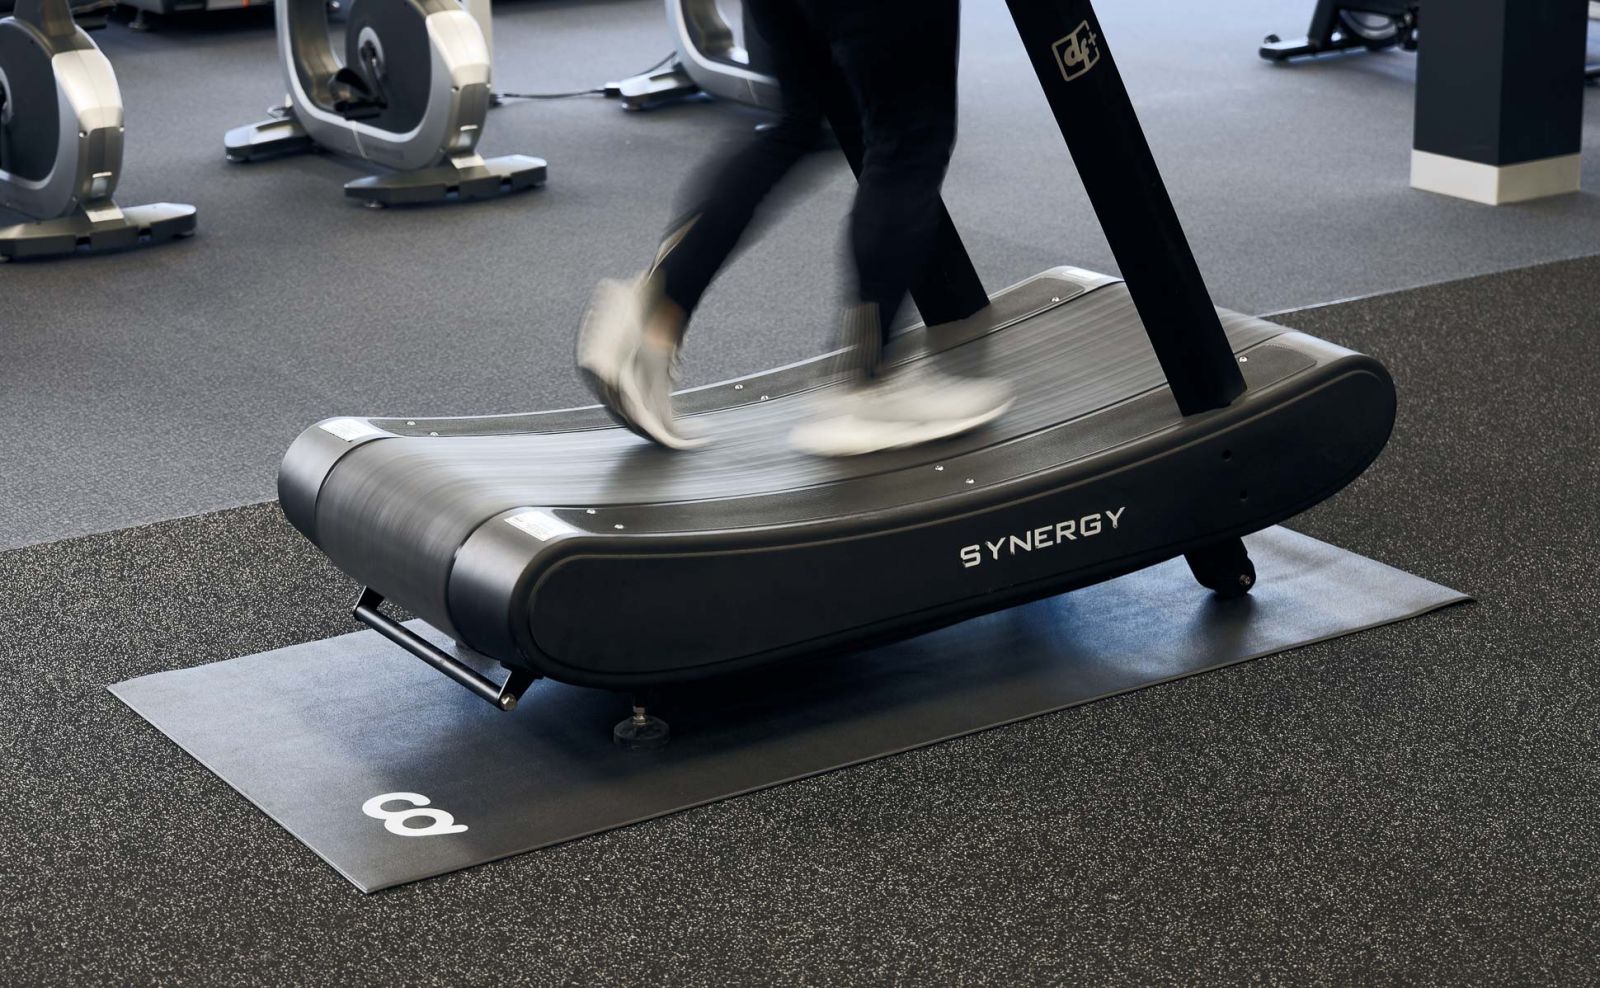 Exercise Equipment Fitness Floor Mat Treadmill Peloton Bike Gym (92 cm x  199cm) 